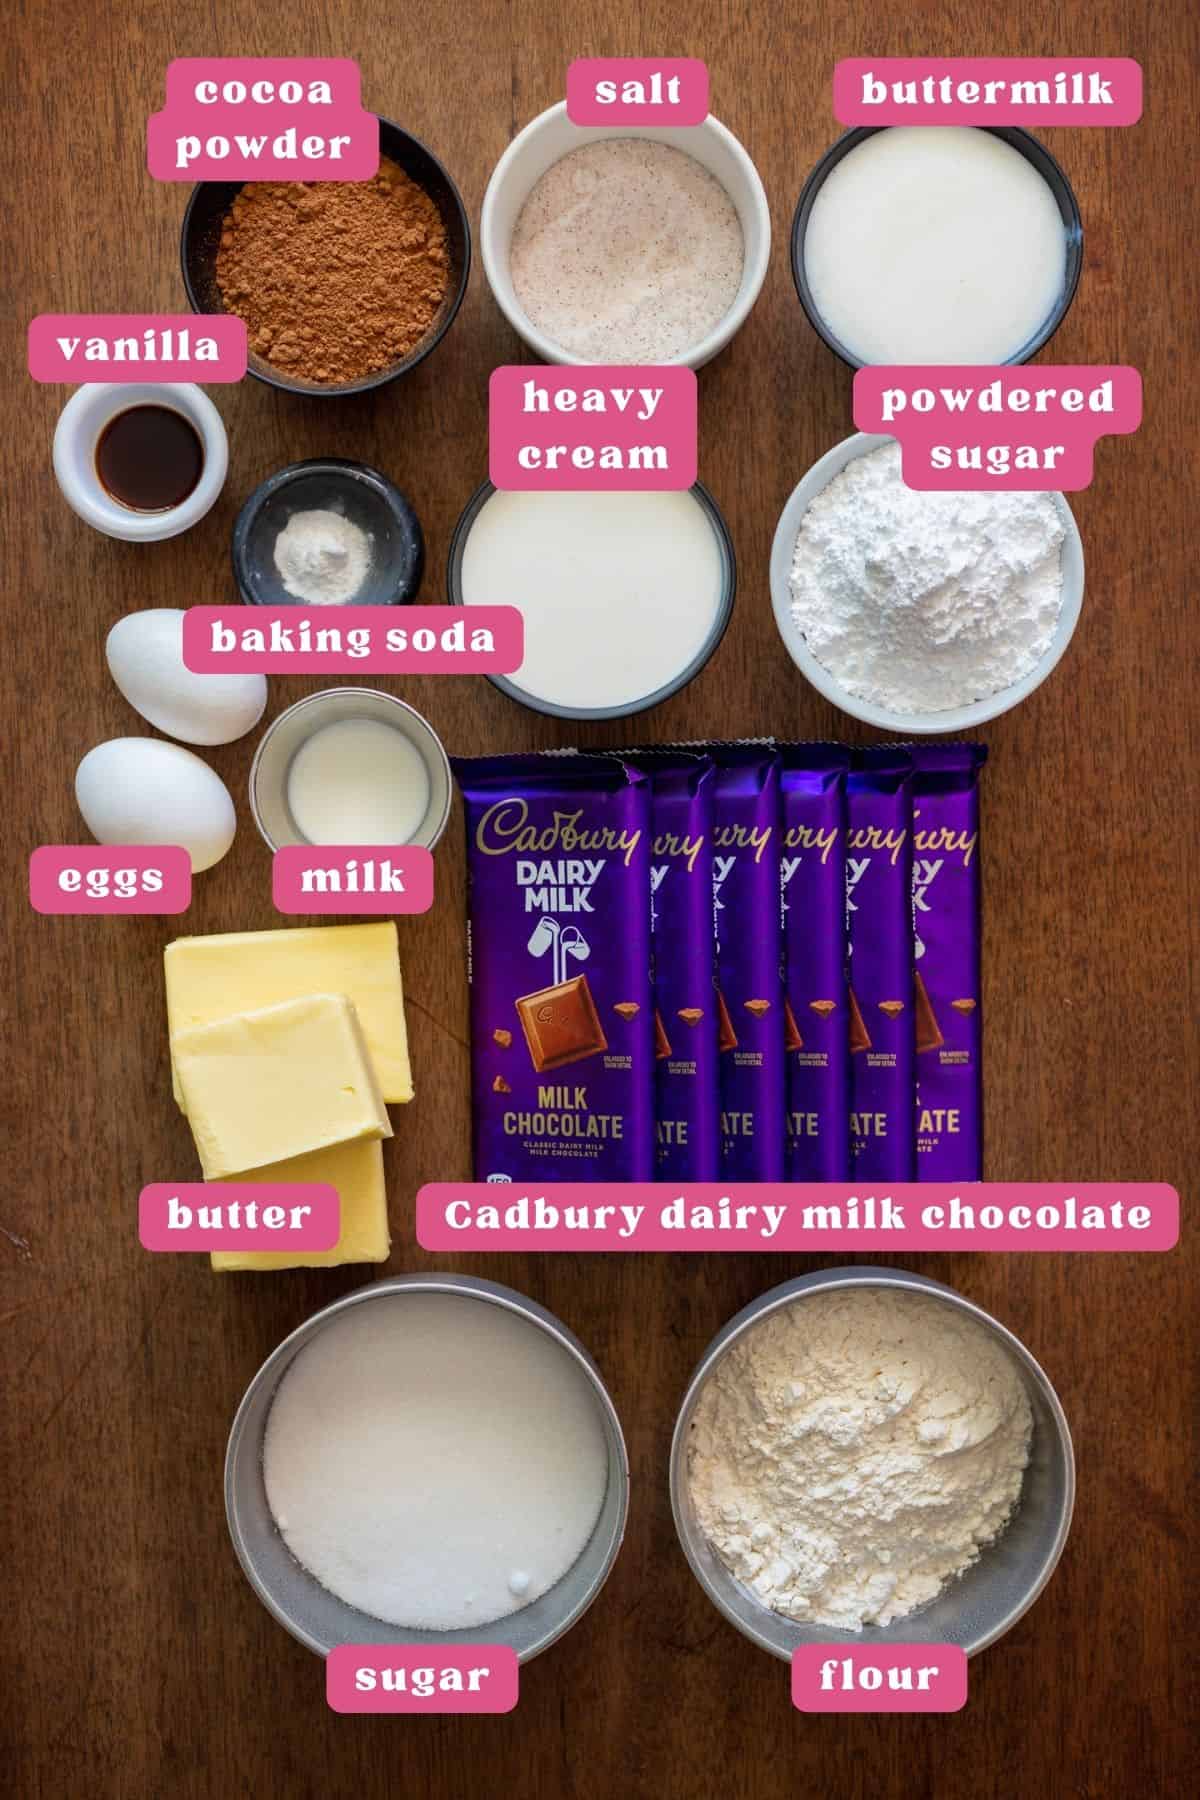 Cadbury dairy milk chocolate cake ingredients